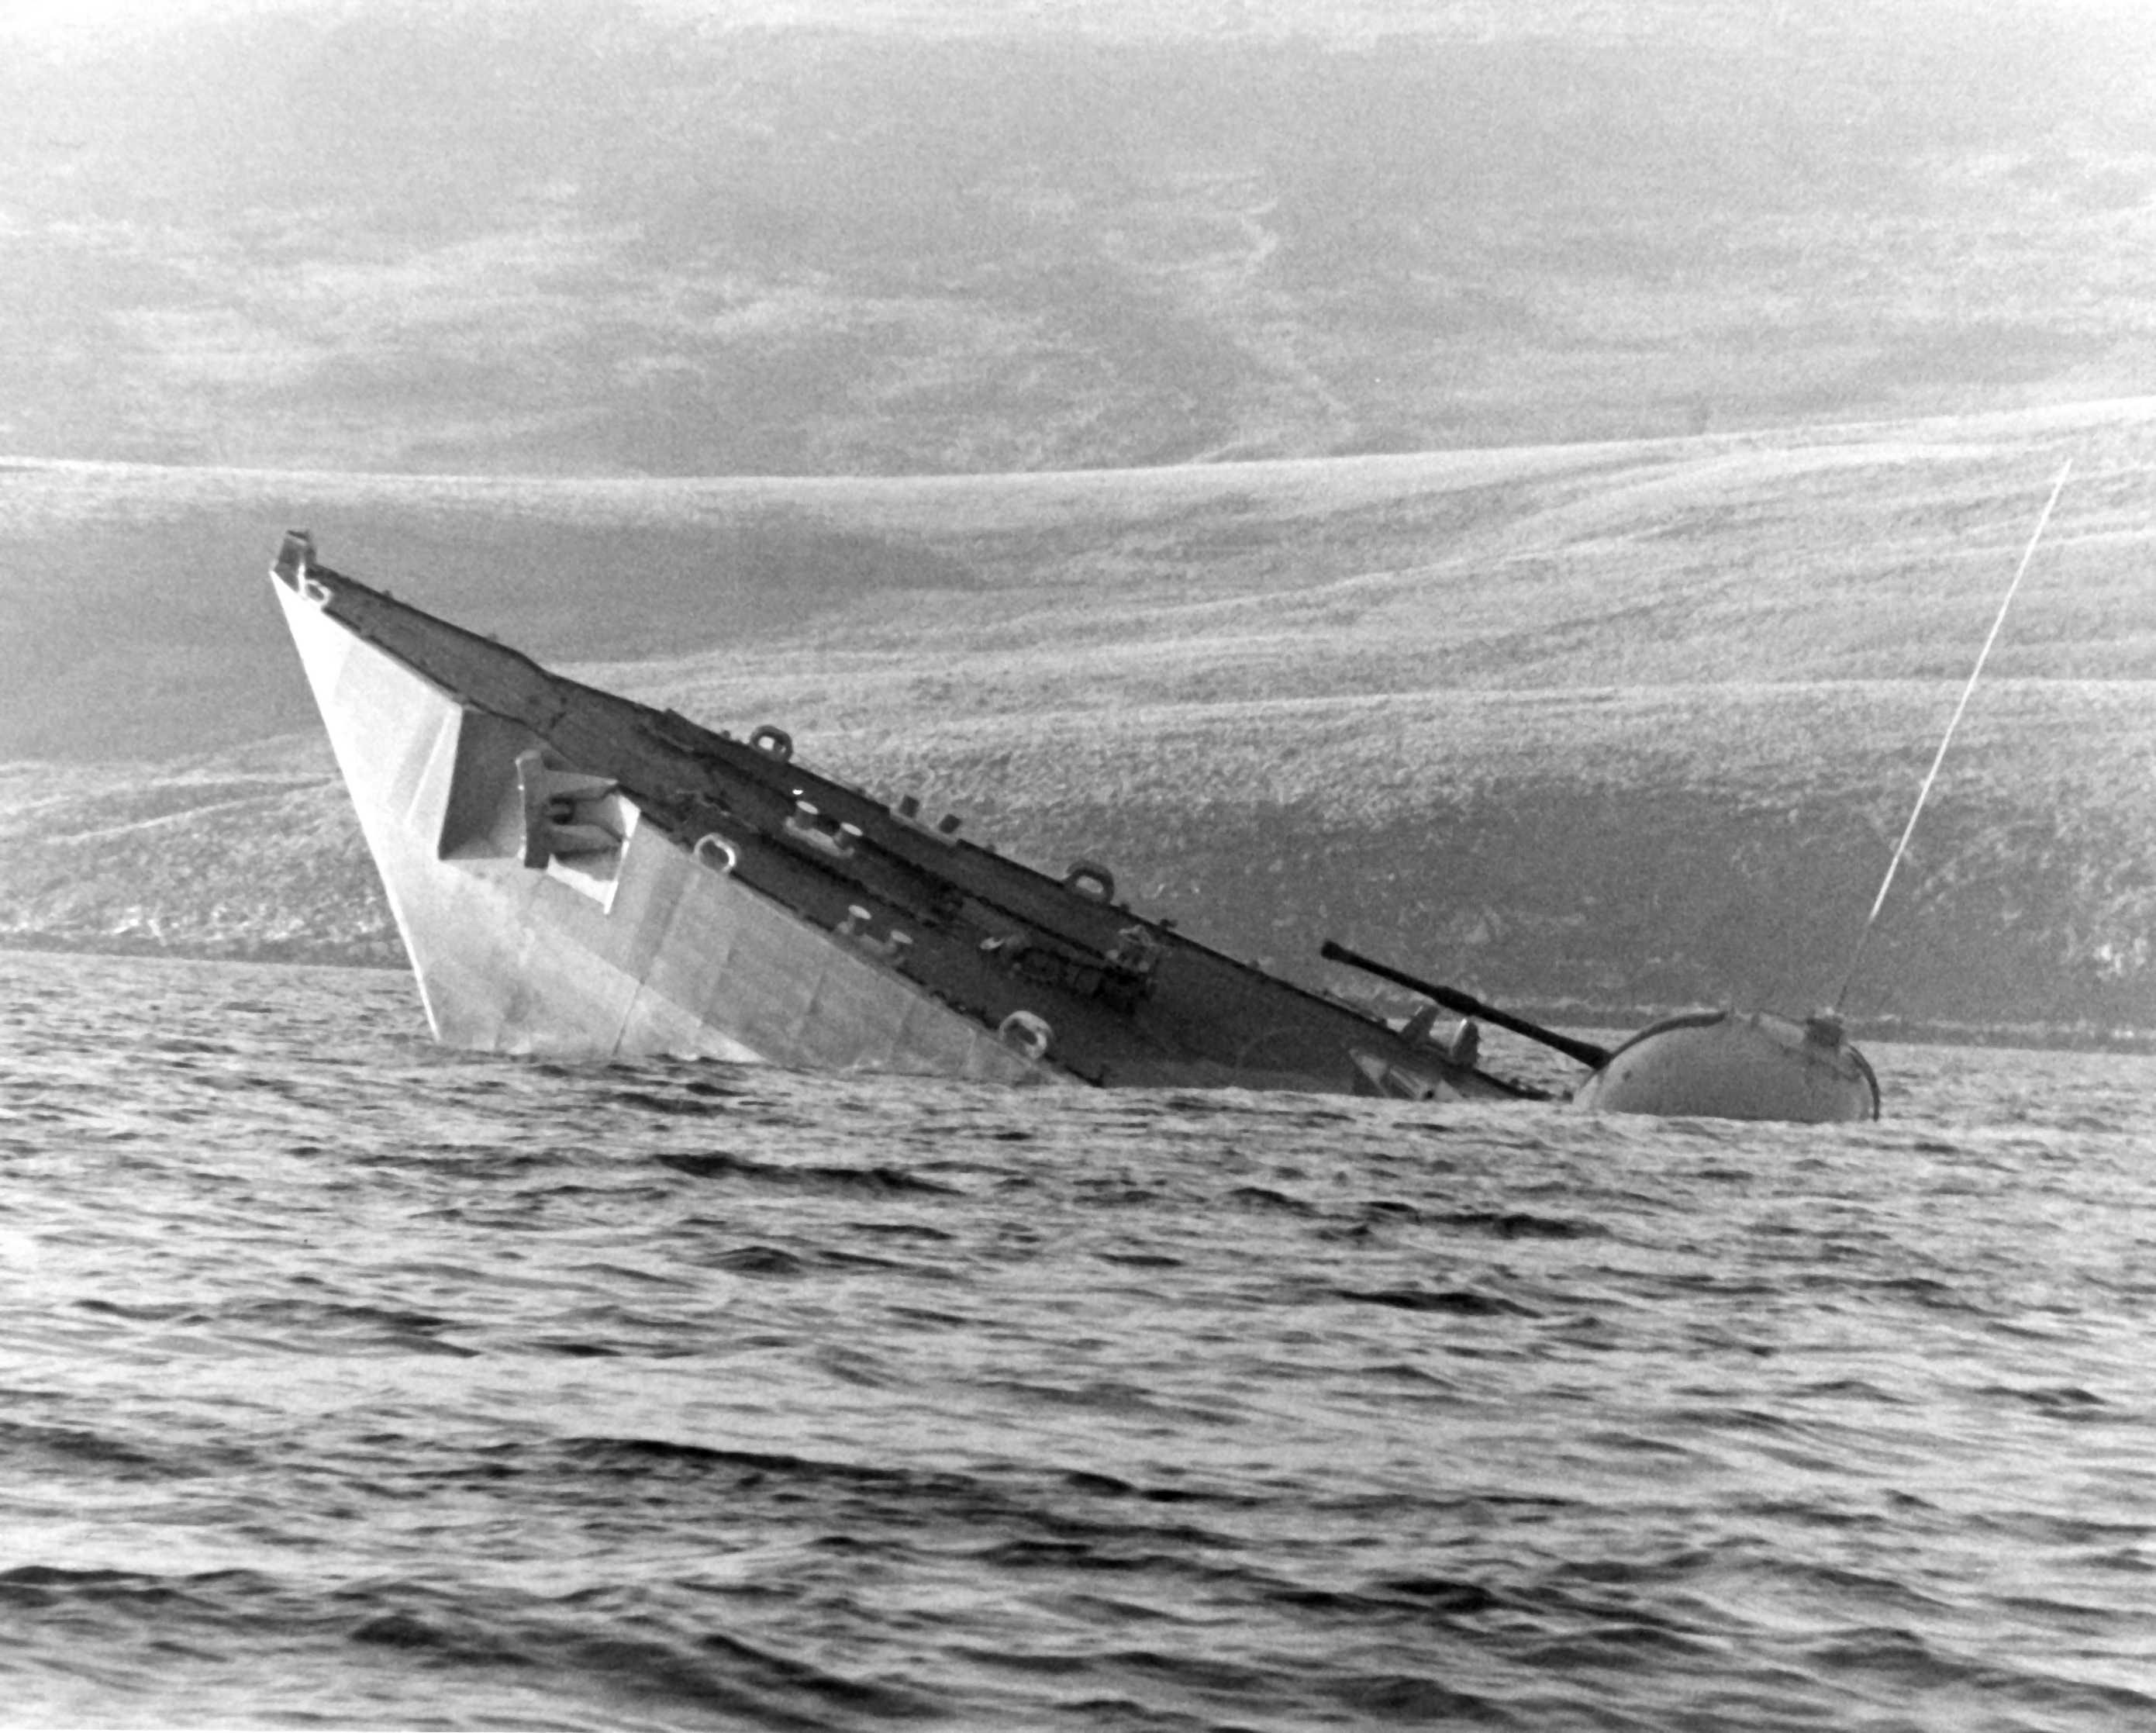 Ship_Sinking_Falklands_Islands_War_HMS_Antelope